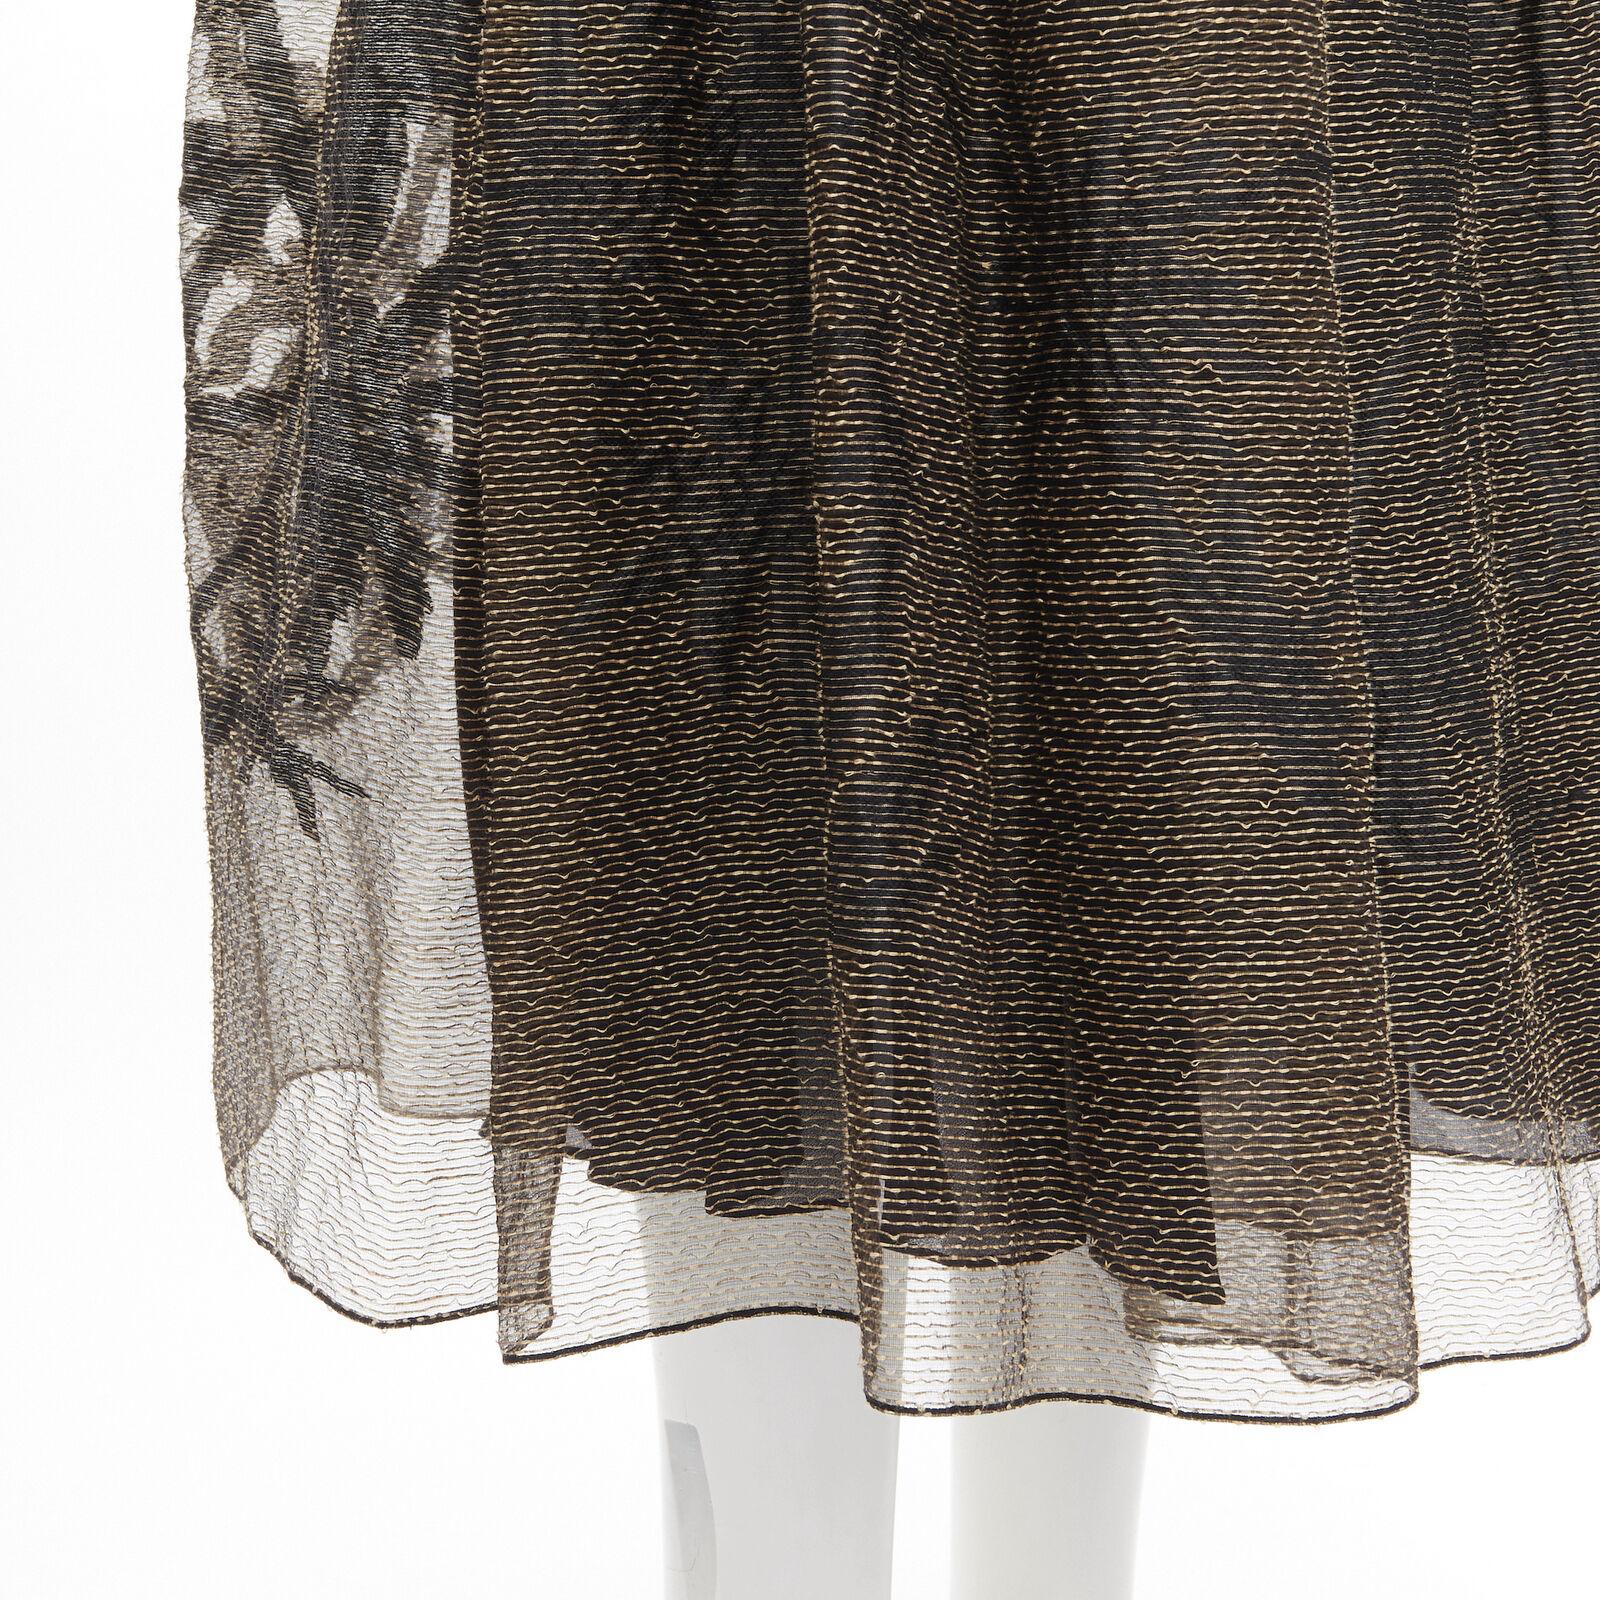 CHRISTIAN DIOR 2021 linen silk gold black leaf pattern faille full skirt FR36 XS
Reference: AAWC/A00003
Brand: Christian Dior
Designer: Maria Grazia Chiuri
Model: 021J12A7107
Collection: 2021 - Runway
Material: Linen, Silk
Color: Gold,